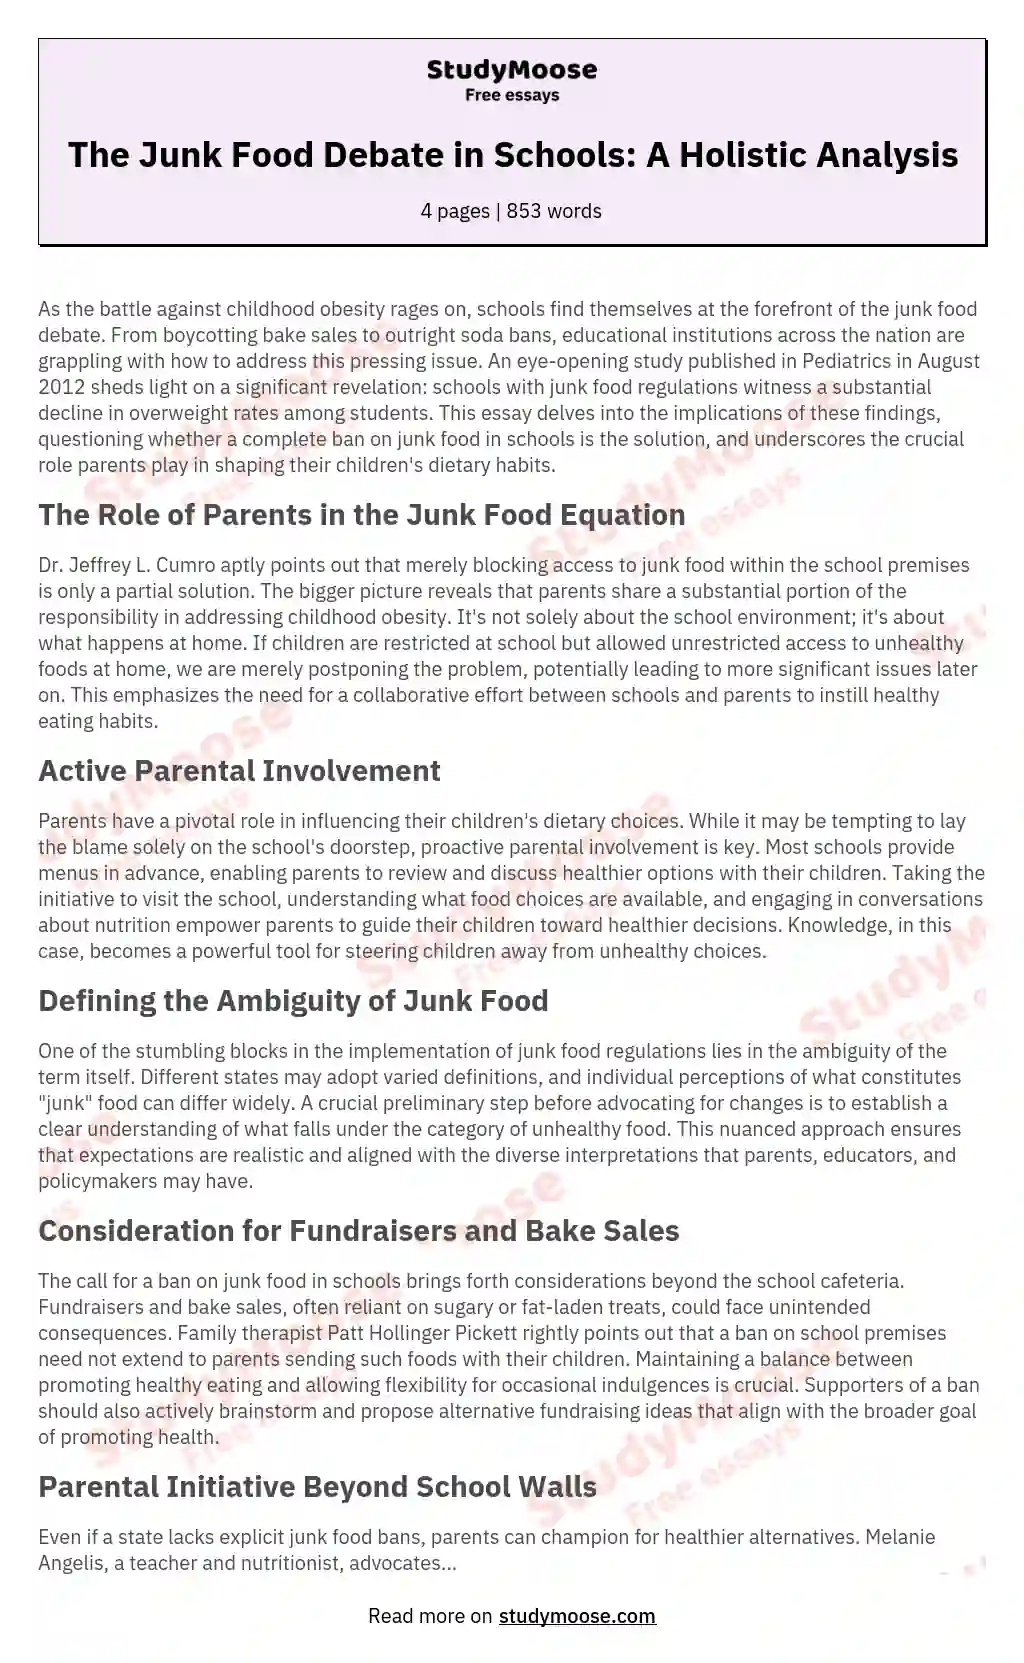 The Junk Food Debate in Schools: A Holistic Analysis essay